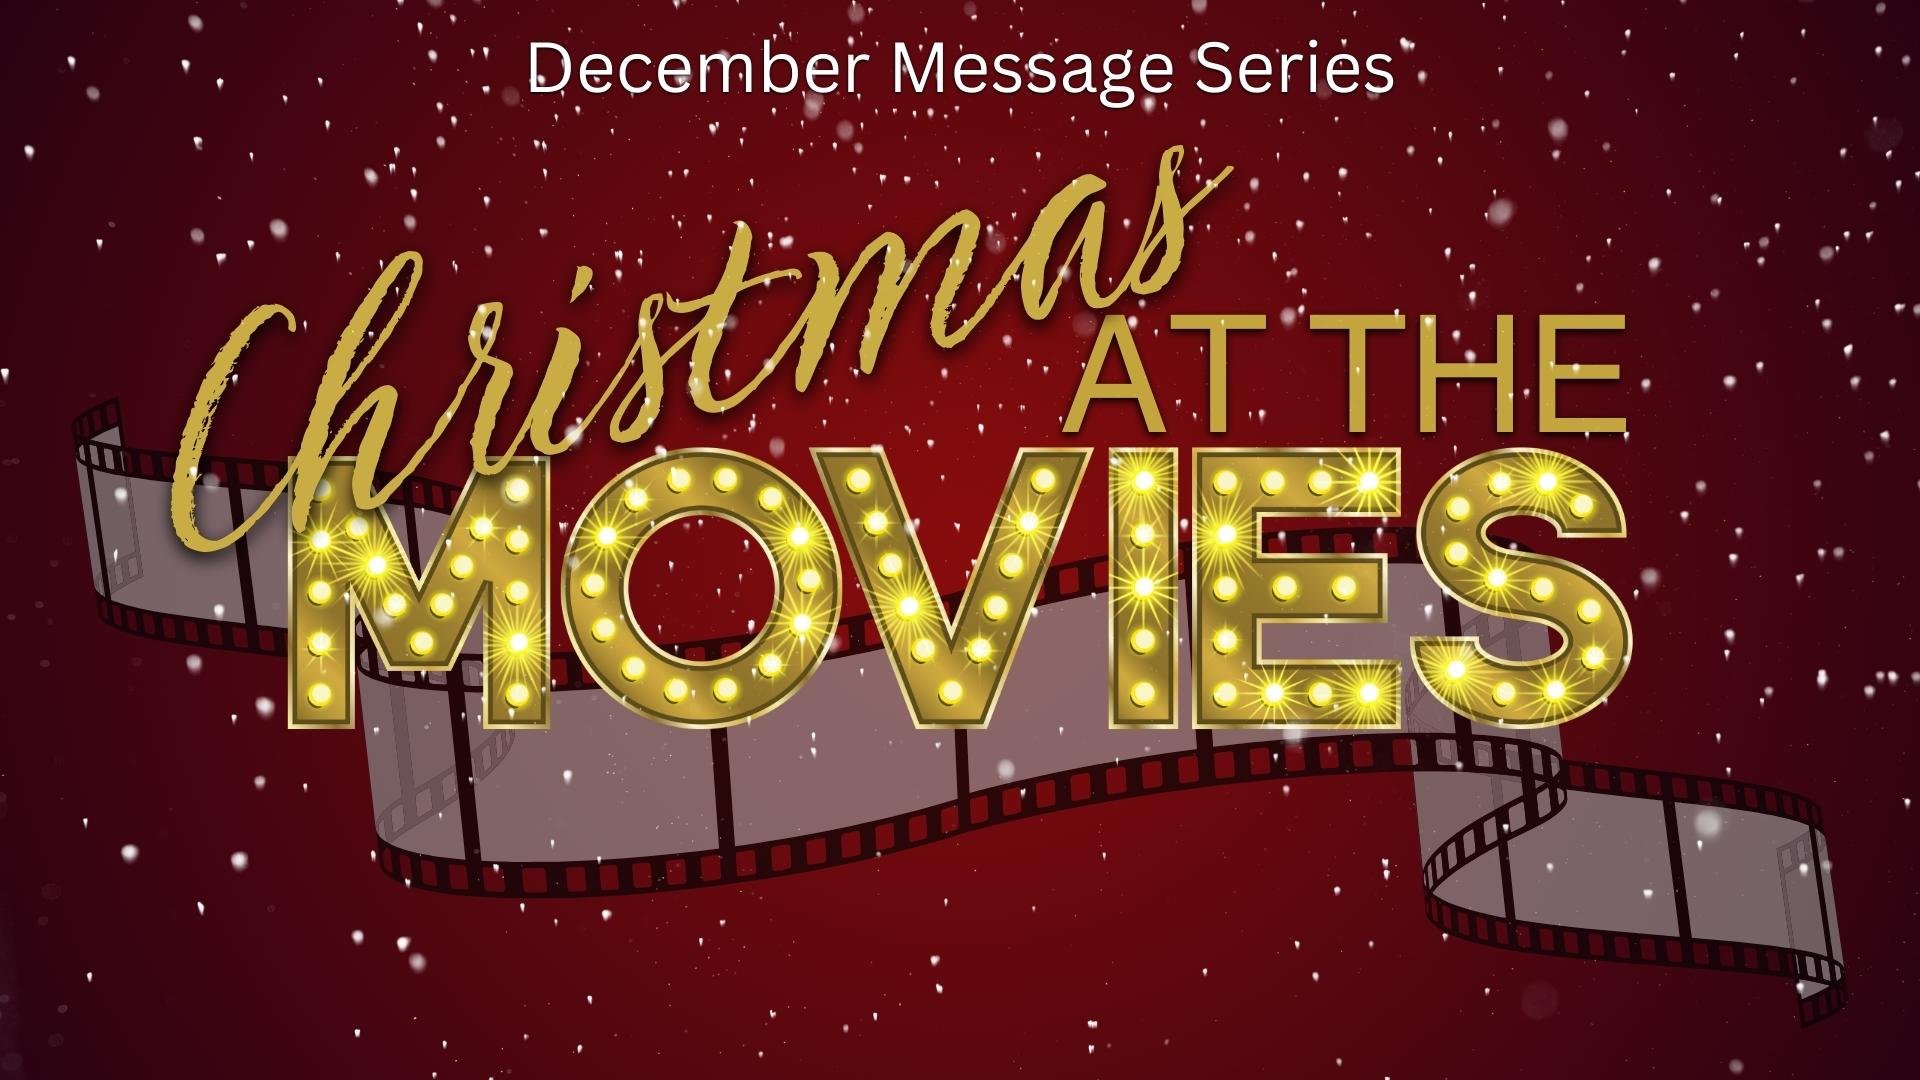 Christmas At the Movies